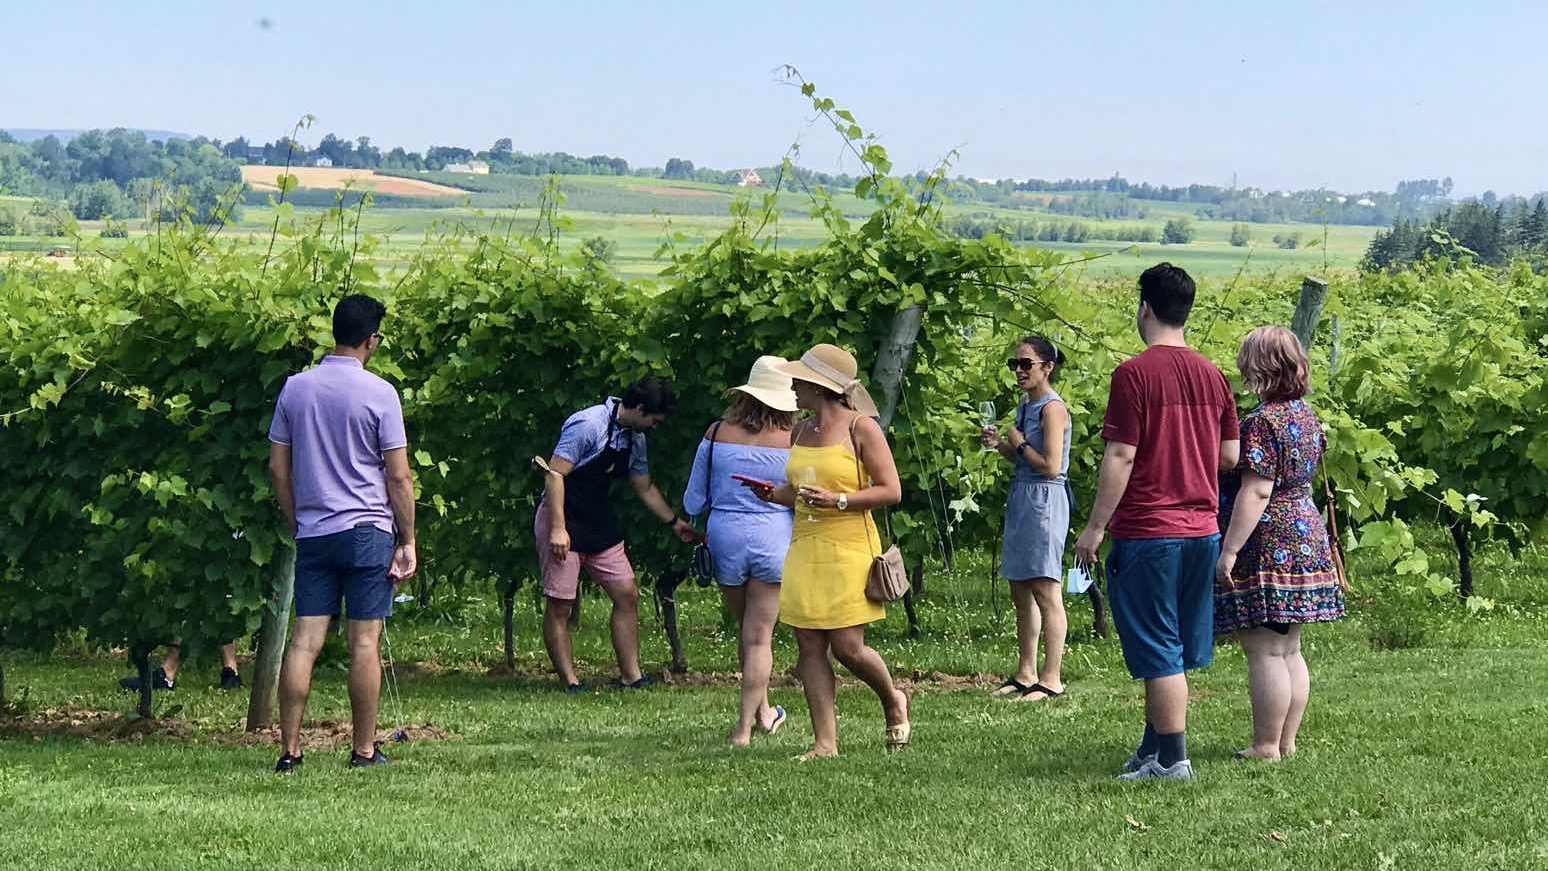 Participants in a nova scotia wine tour explore a vineyward